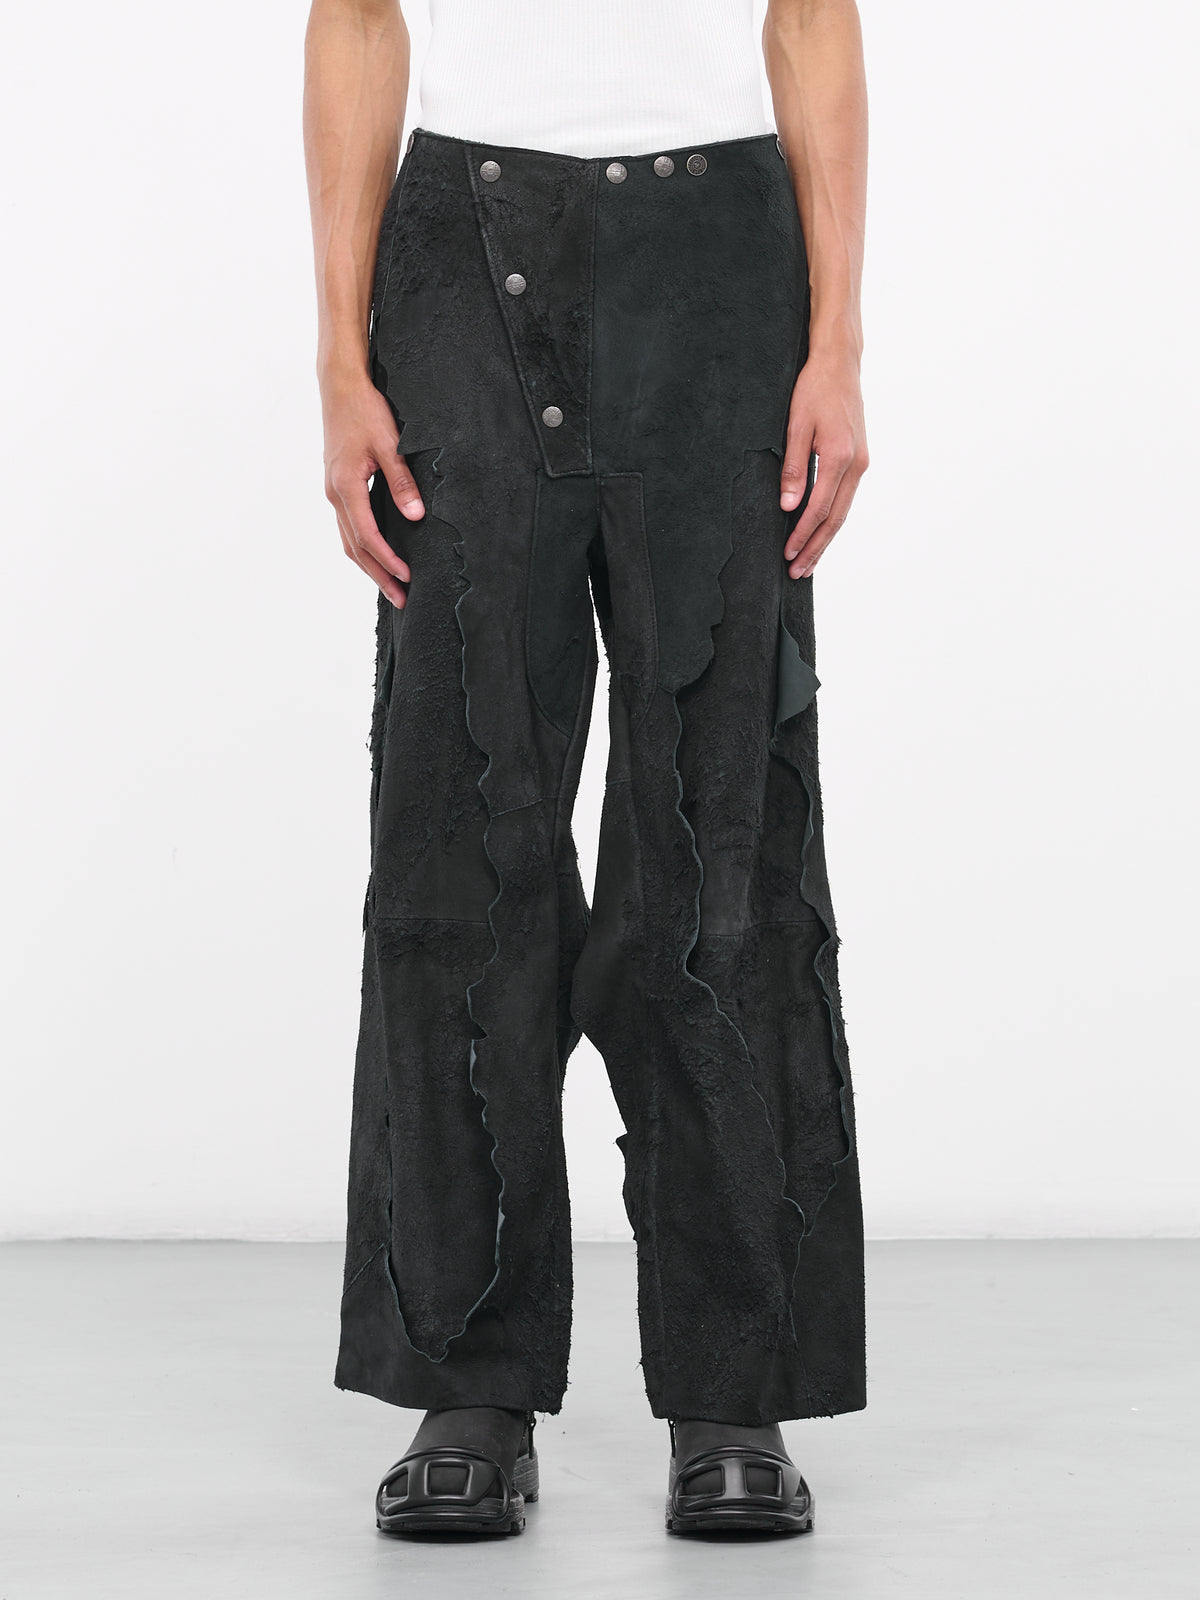 Distressed Leather Pants (A12582-0CNAK-9XX-DEEP-BLACK)